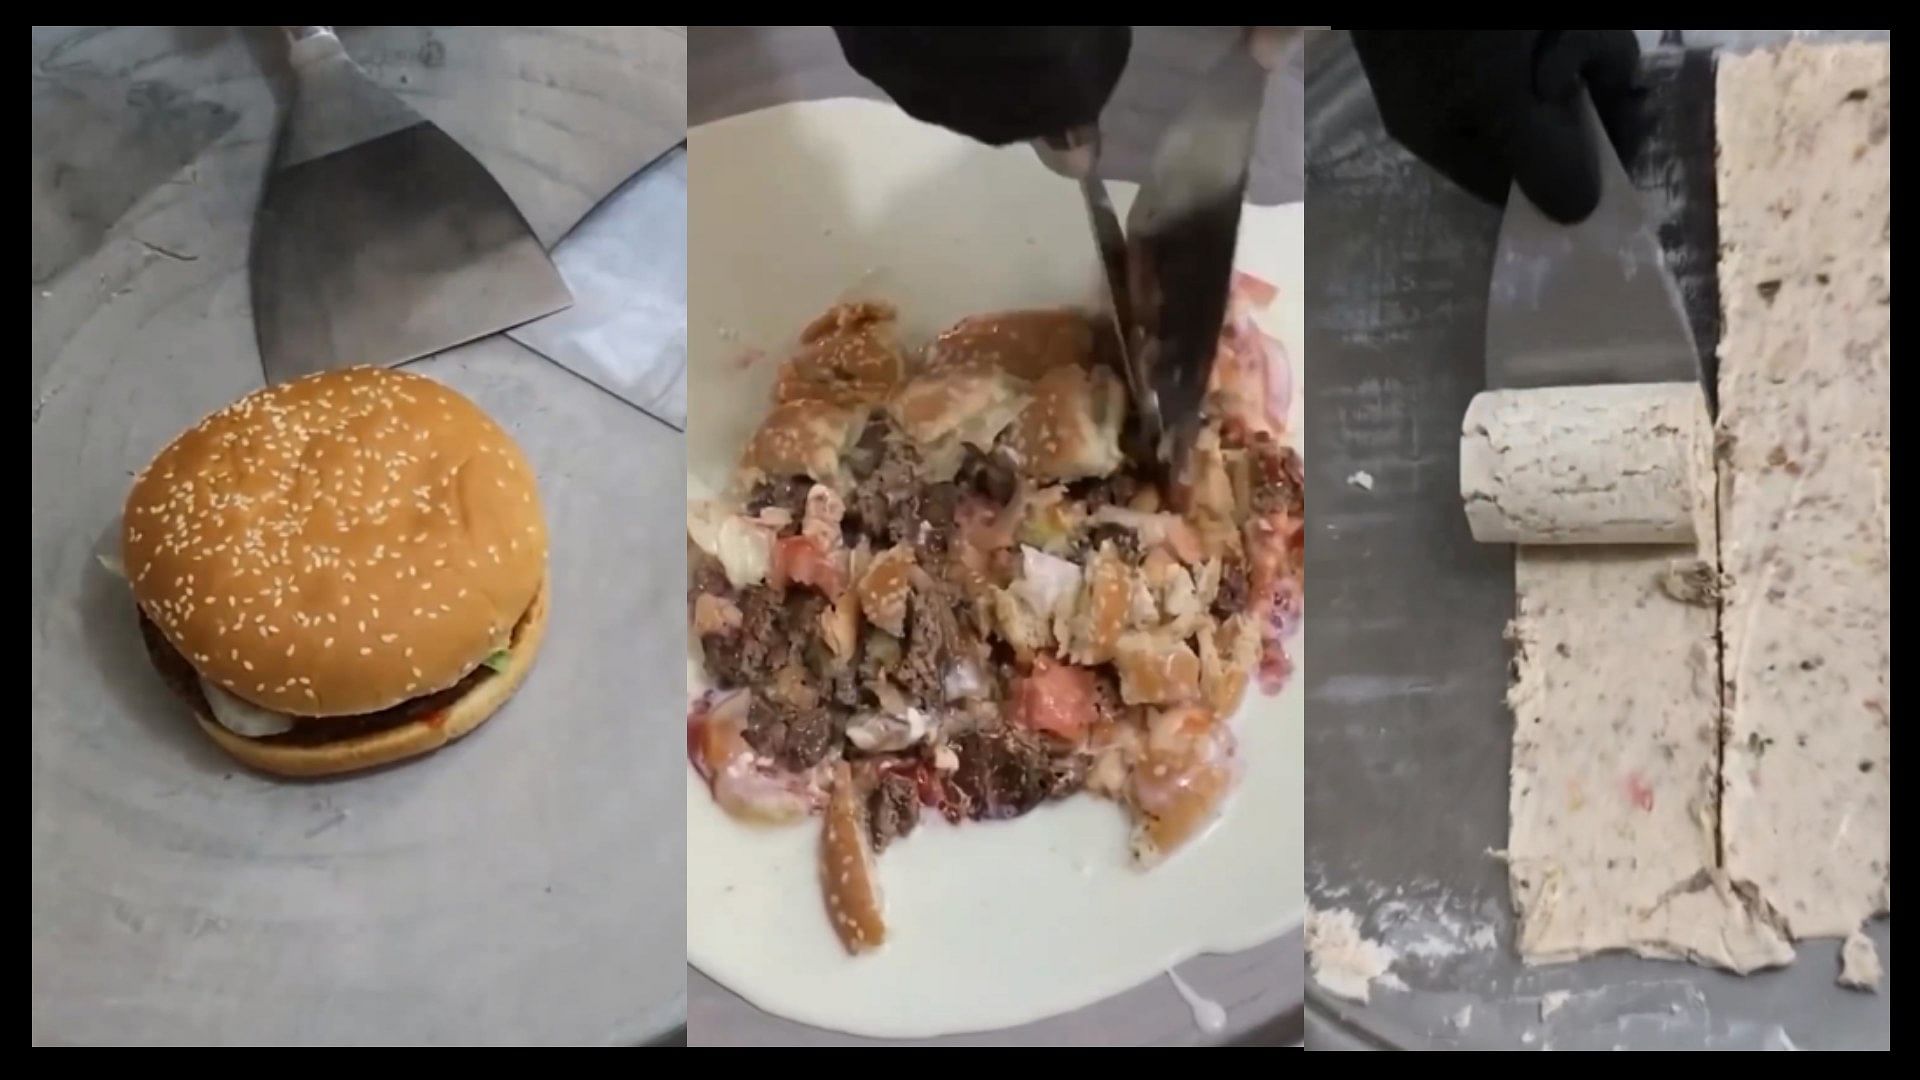 Shopkeeper prepare burger ice cream roll weird food combination video goes viral on social media